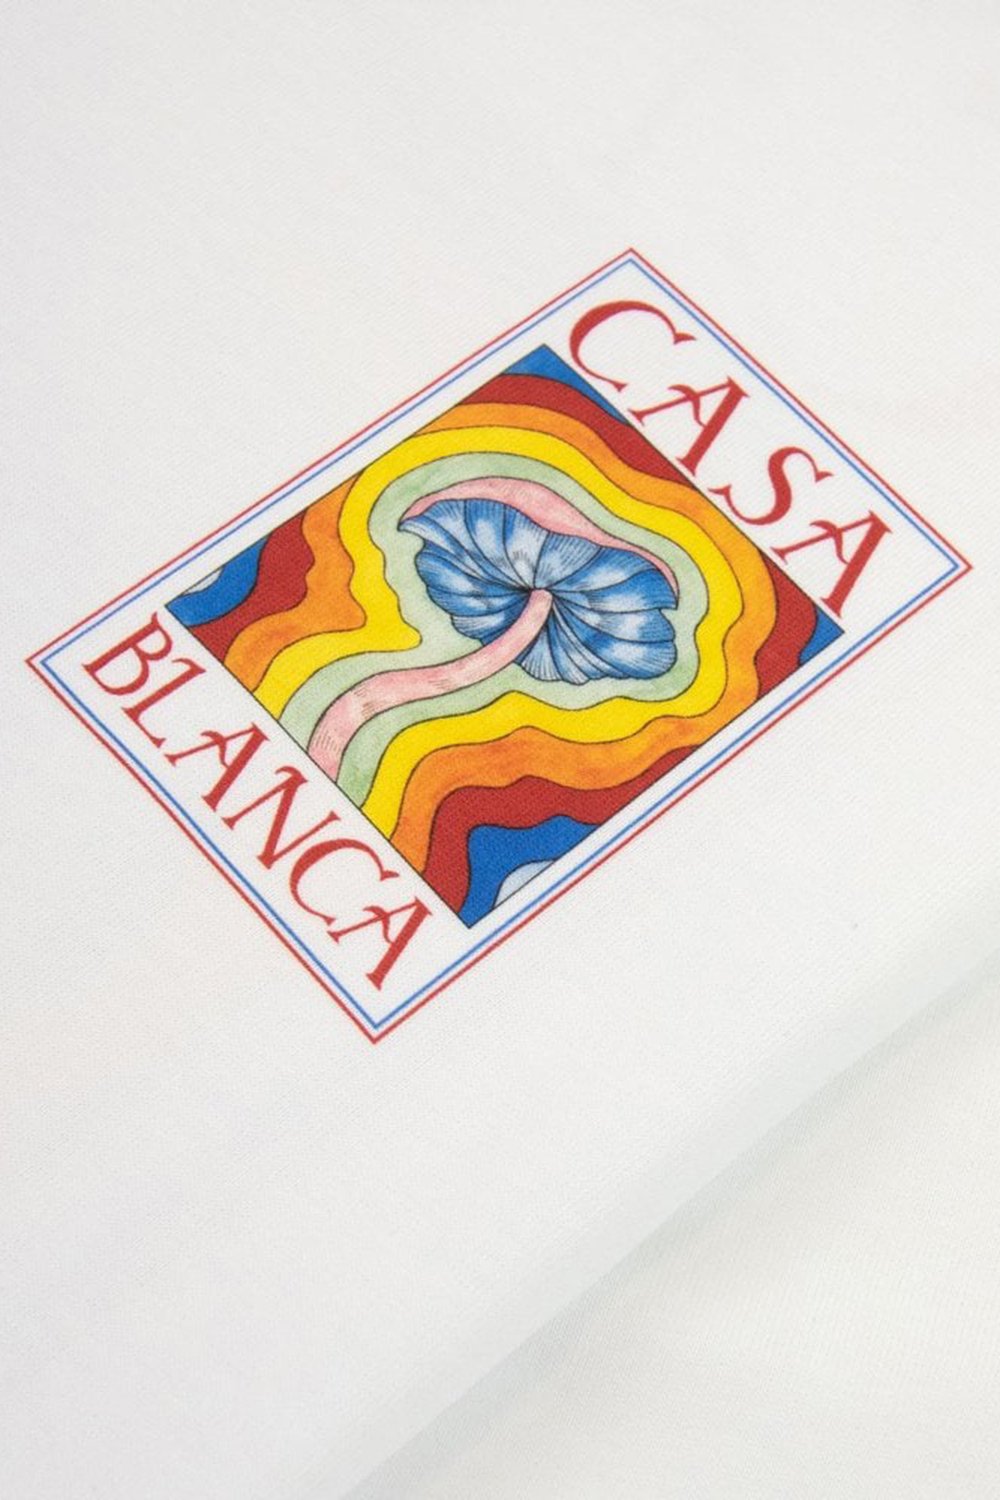 Men's White Casablanca Mind Vibrations Printed T-shirt